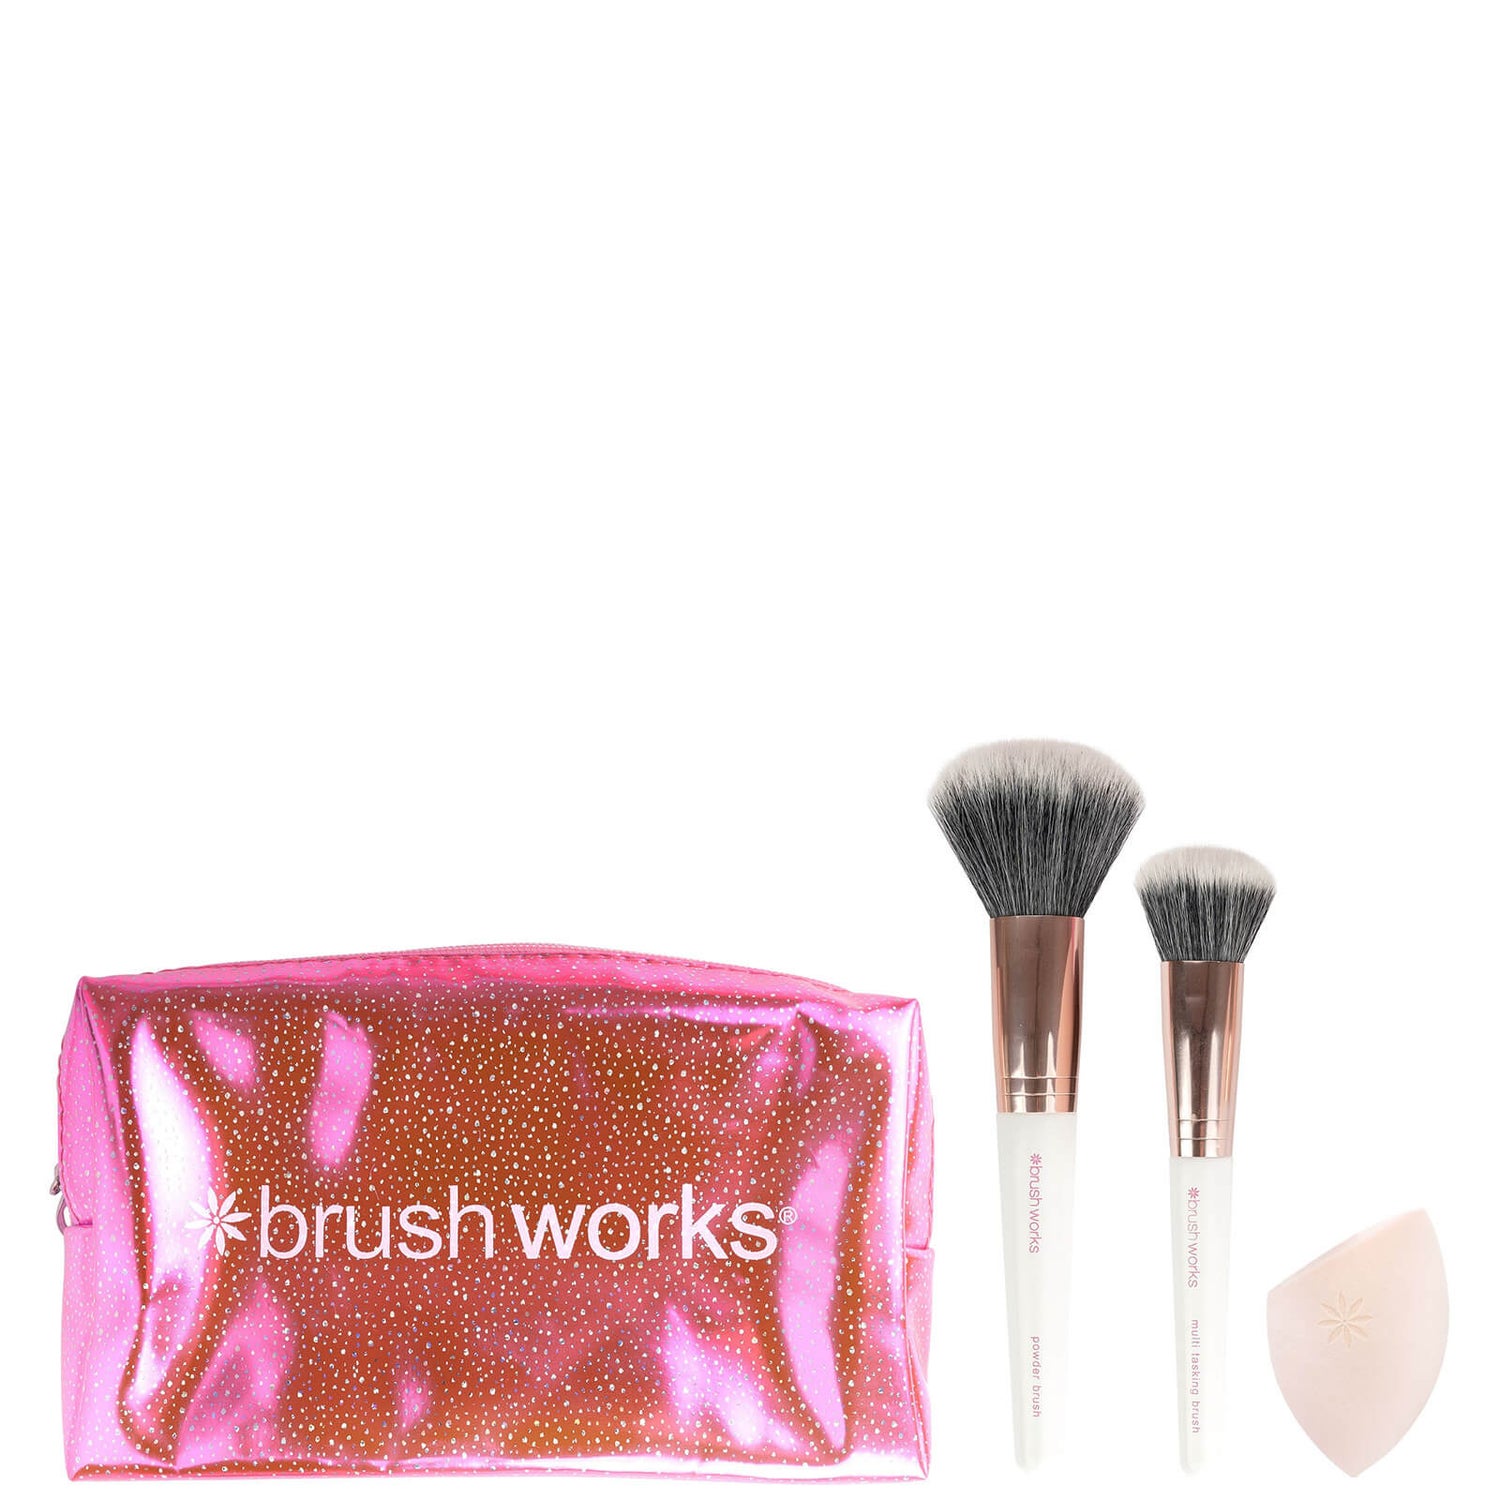 brushworks Travel Makeup Brush and Sponge Set